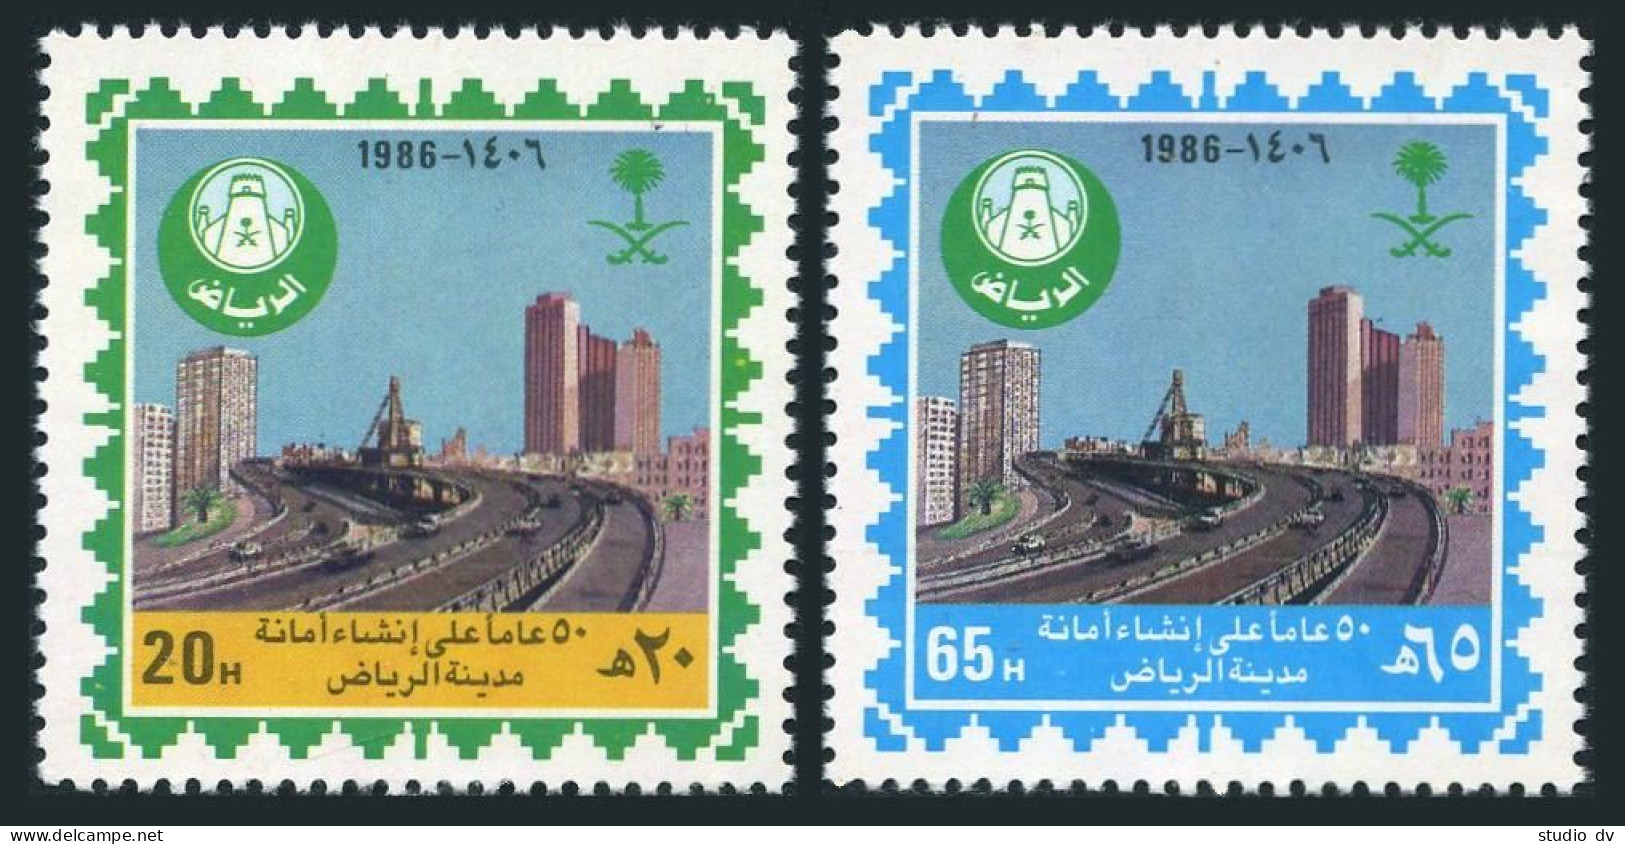 Saudi Arabia 972-973,MNH.Michel 835-836. Rijadh Municipality,50th Ann.Highway. - Arabie Saoudite